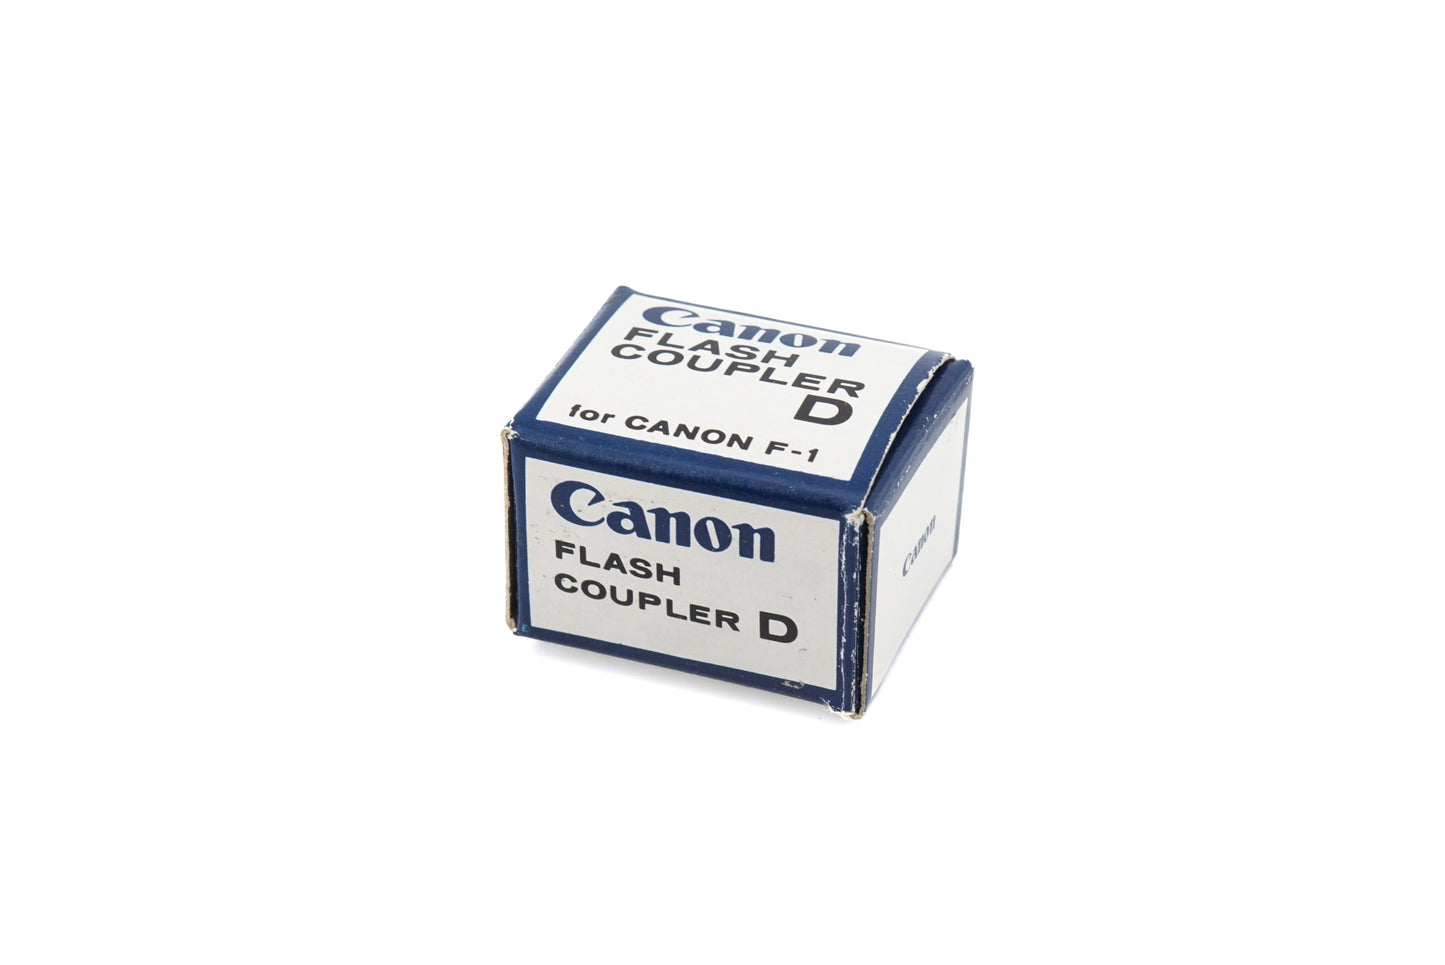 Canon Flash Coupler D